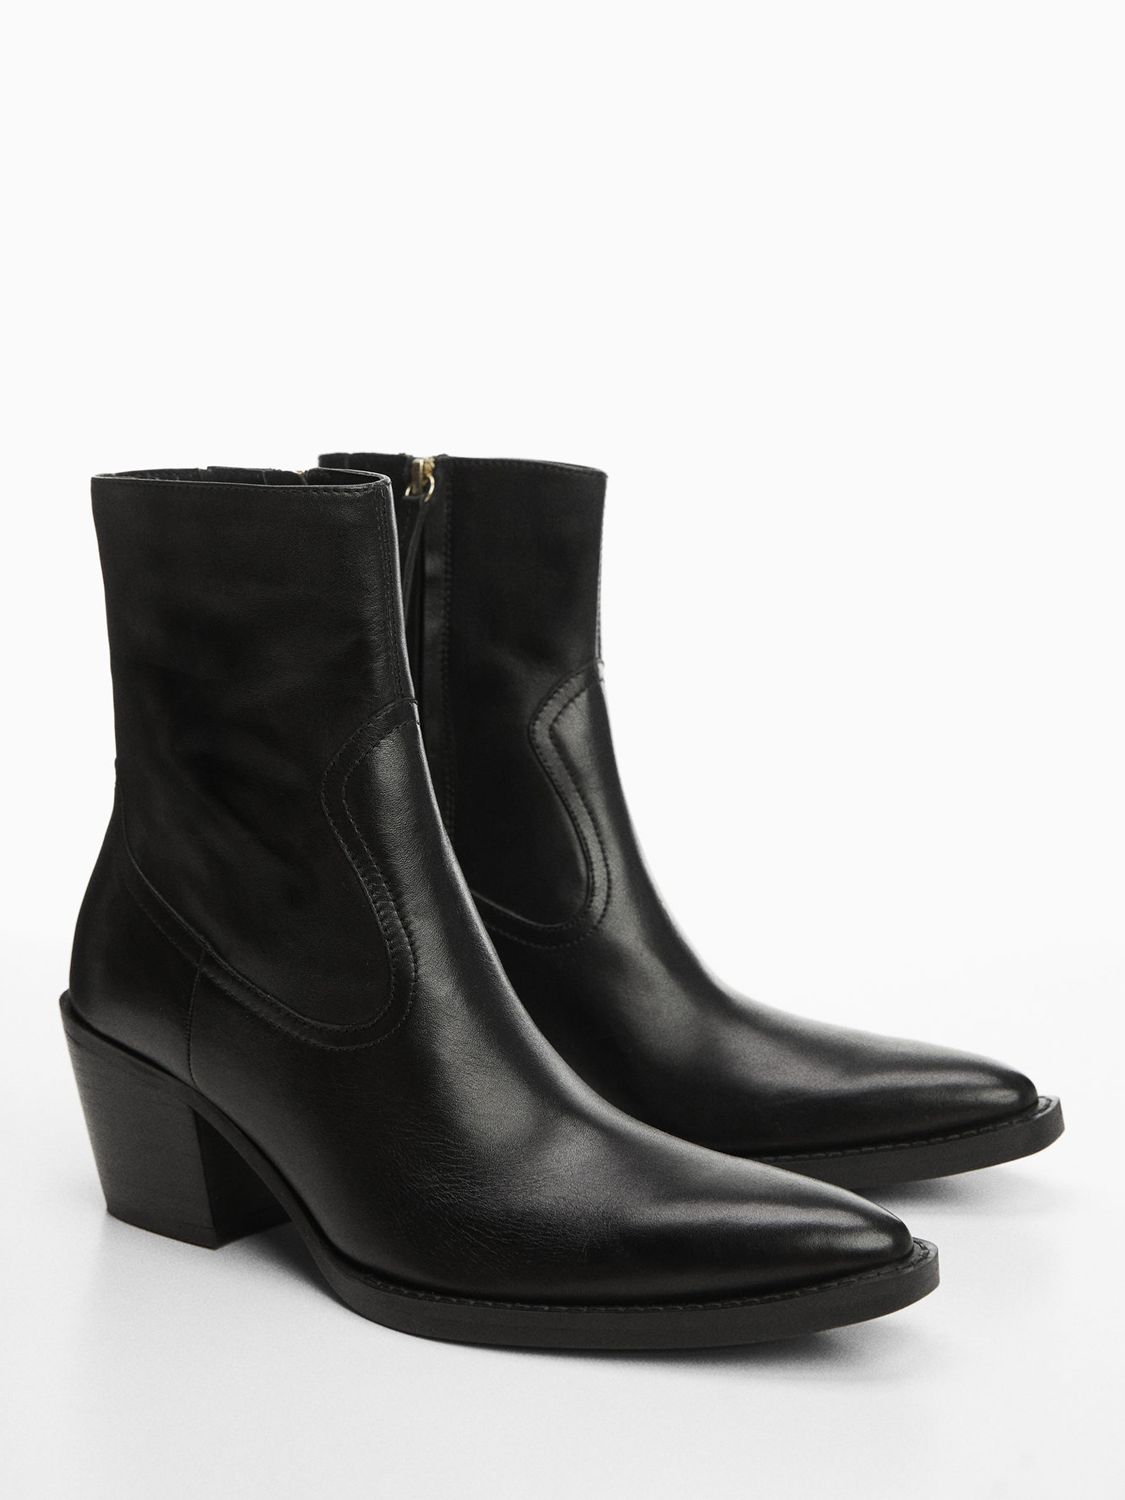 Mango Coa Leather Cowboy Boots, Black, 4